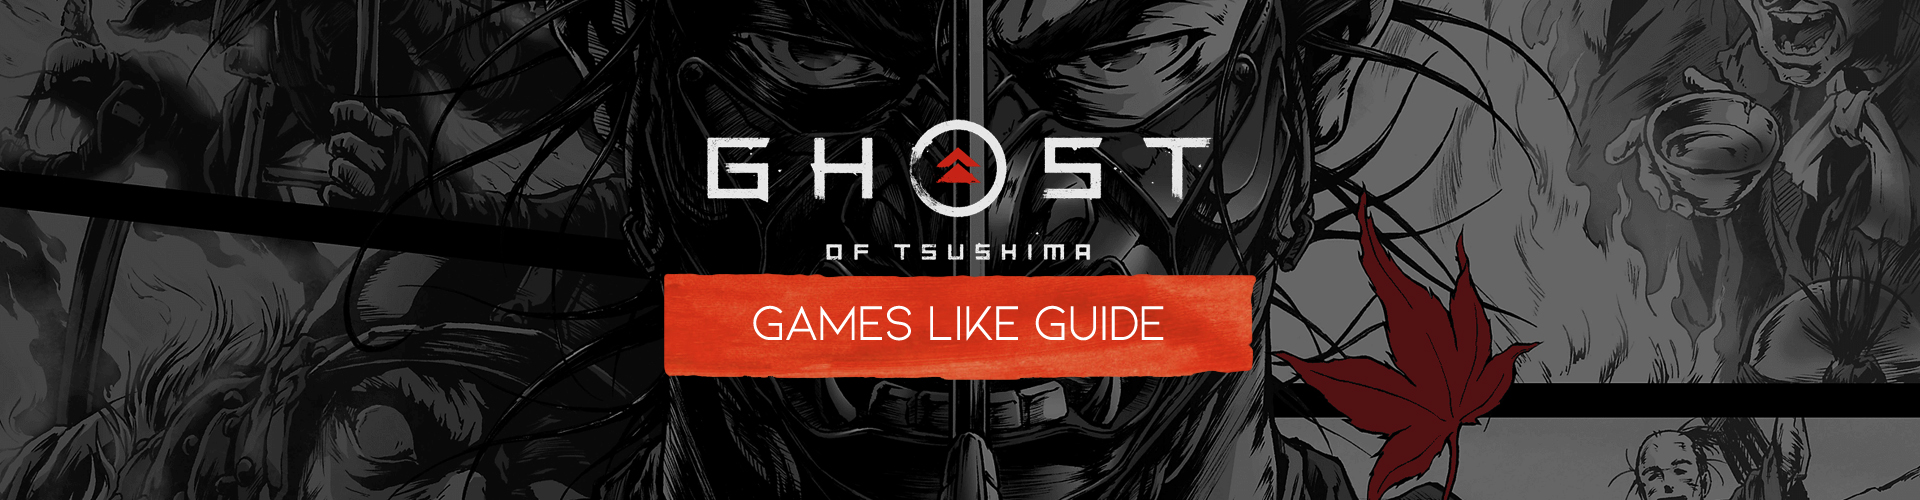 Ghost of Tsushima Games Like Guide